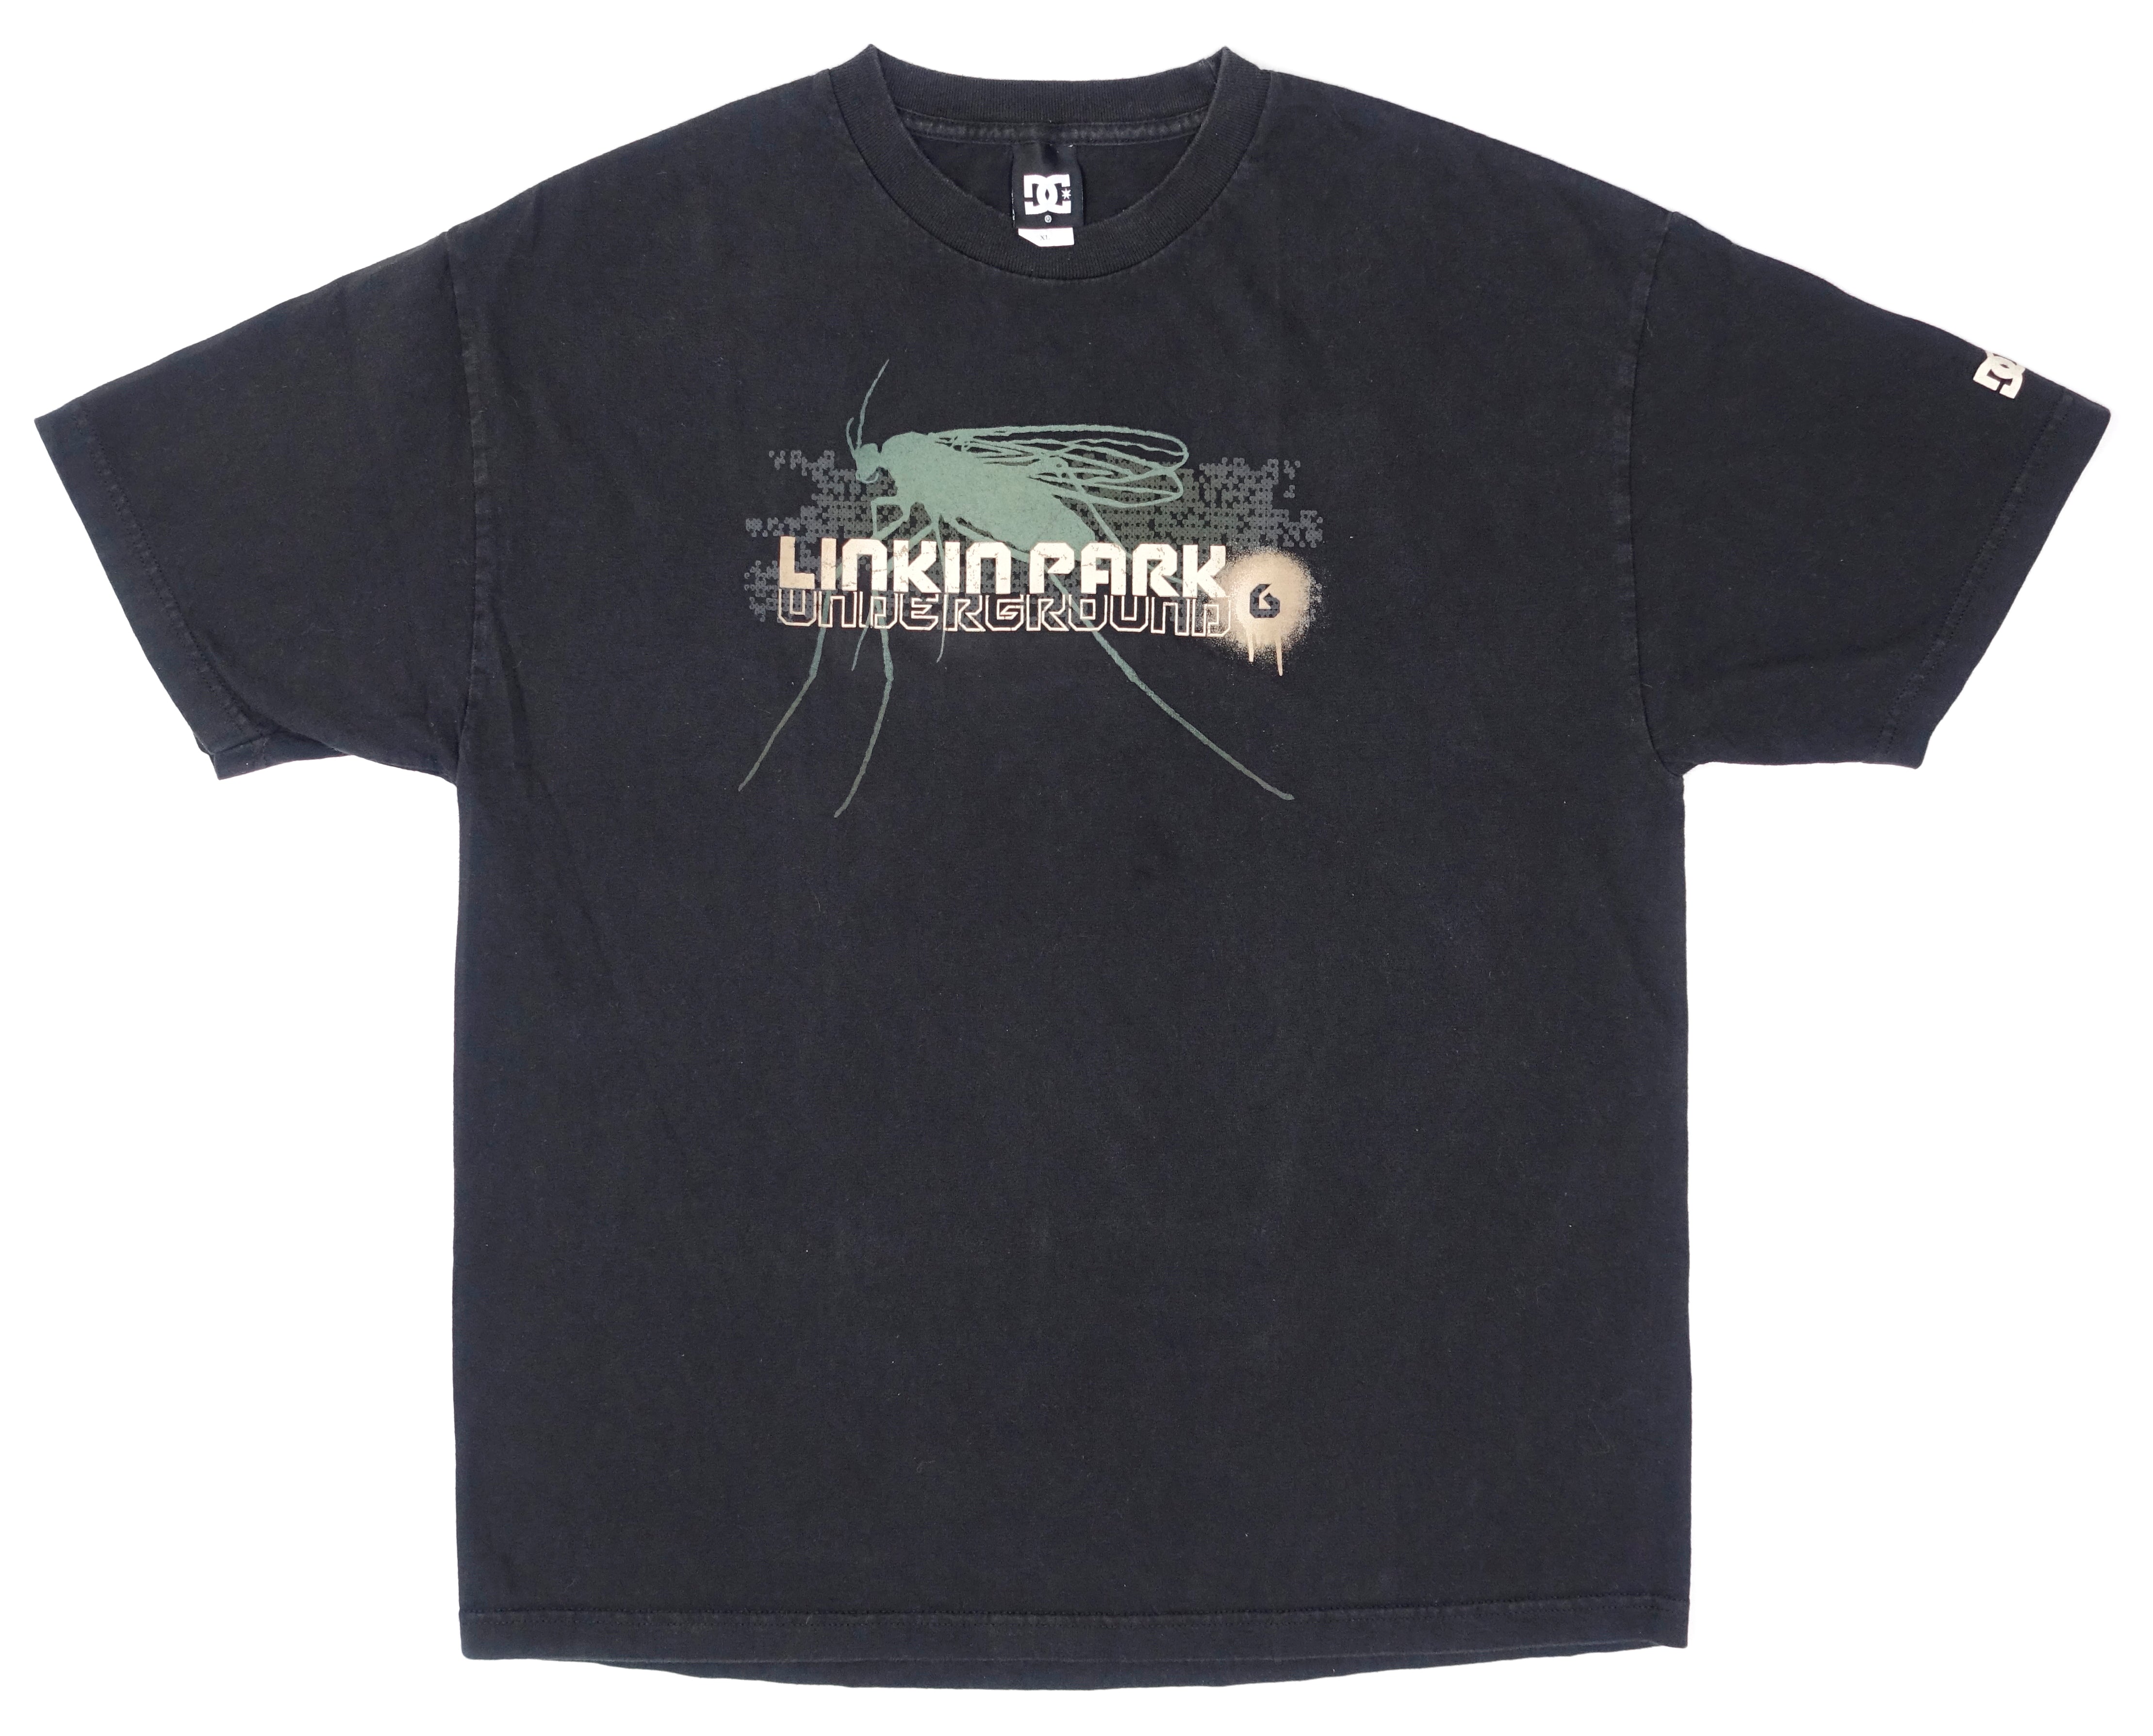 Linkin Park - Underground DC 2003 Promo Tour Shirt Size XL